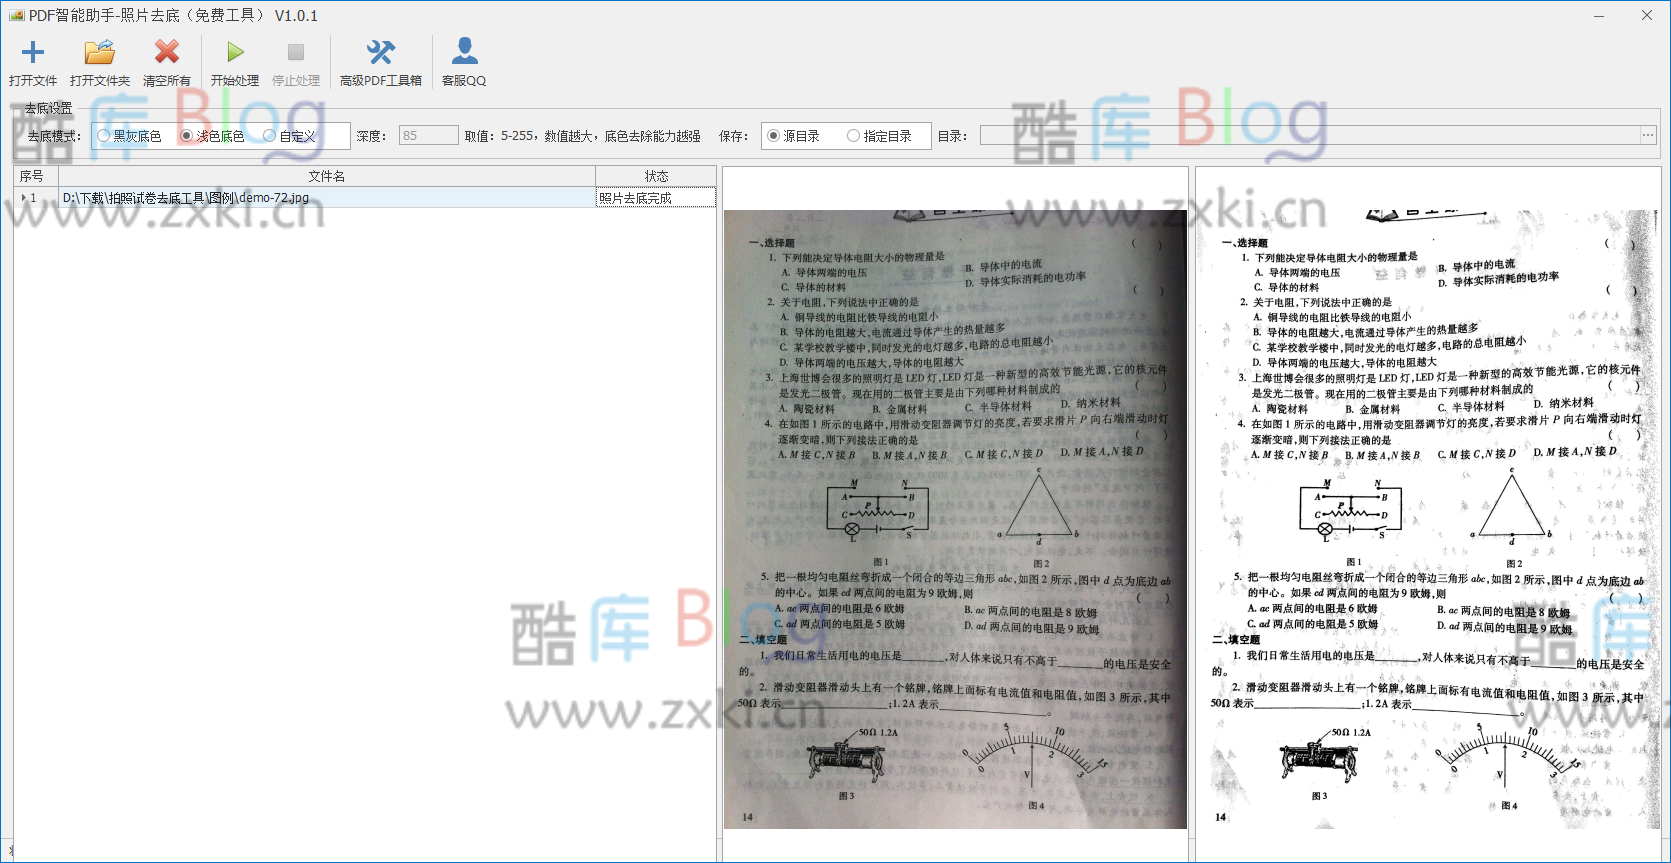 PDF智能助手拍照试卷去底工具1.0.1 第3张插图